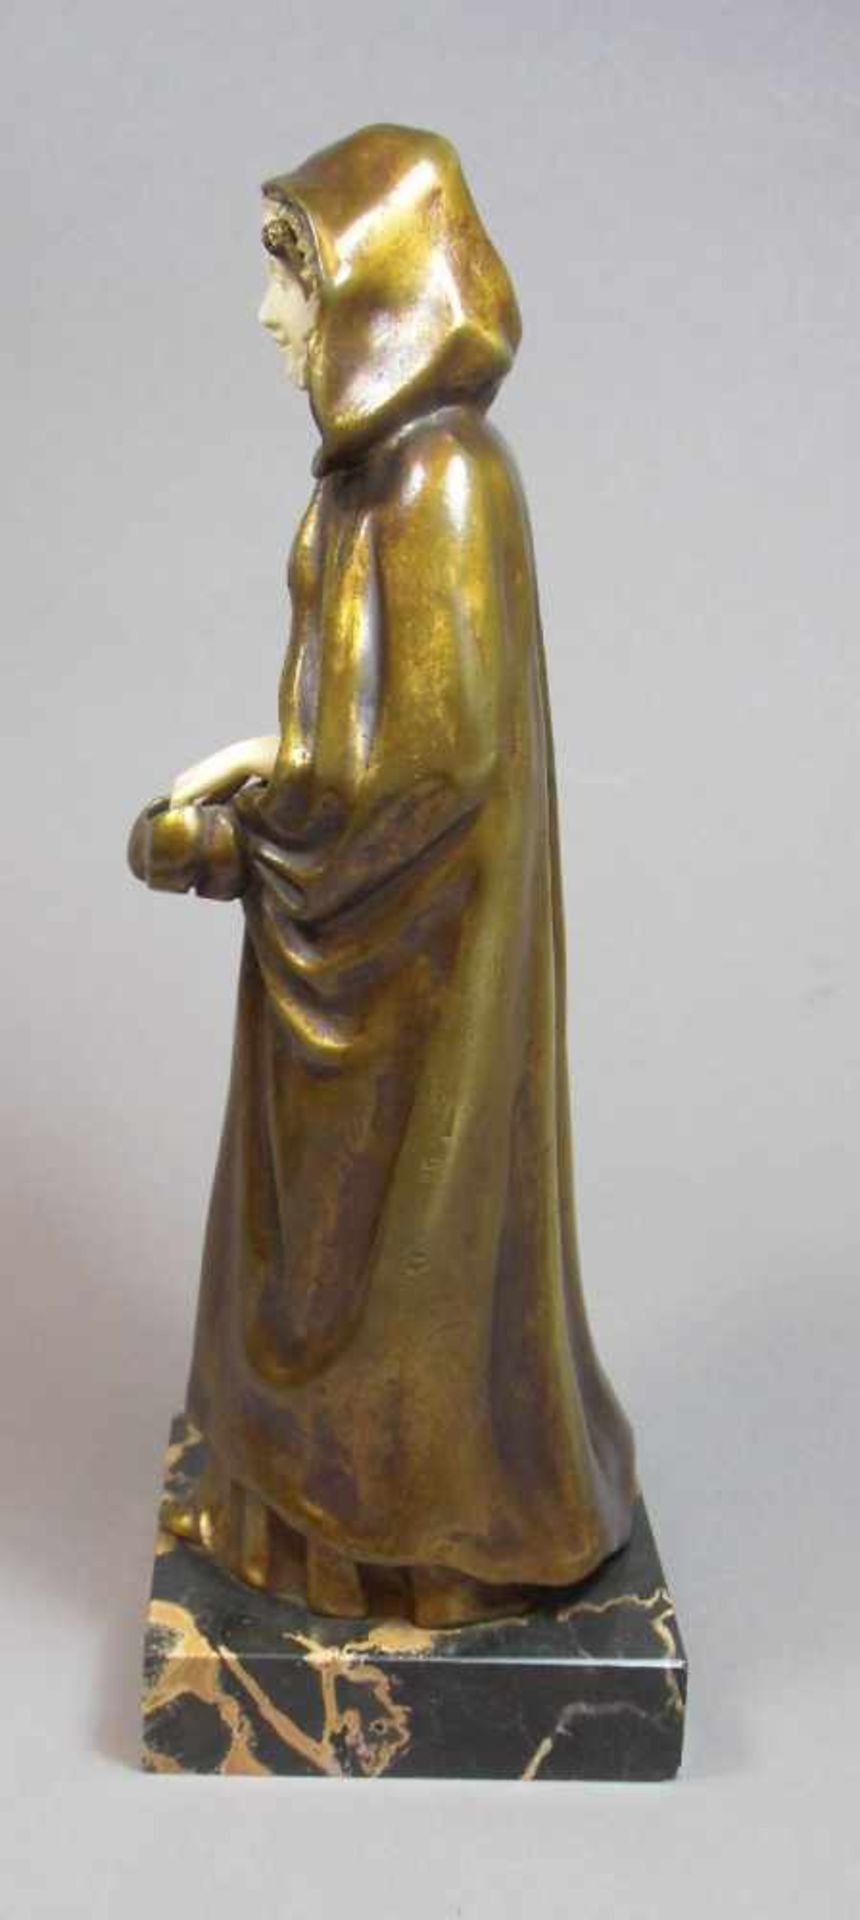 BERNOUD, EUGÈNE (französischer Bildhauer des 19./20. Jh.), Skulptur: "La marche silencieuse", Bronze - Image 4 of 7